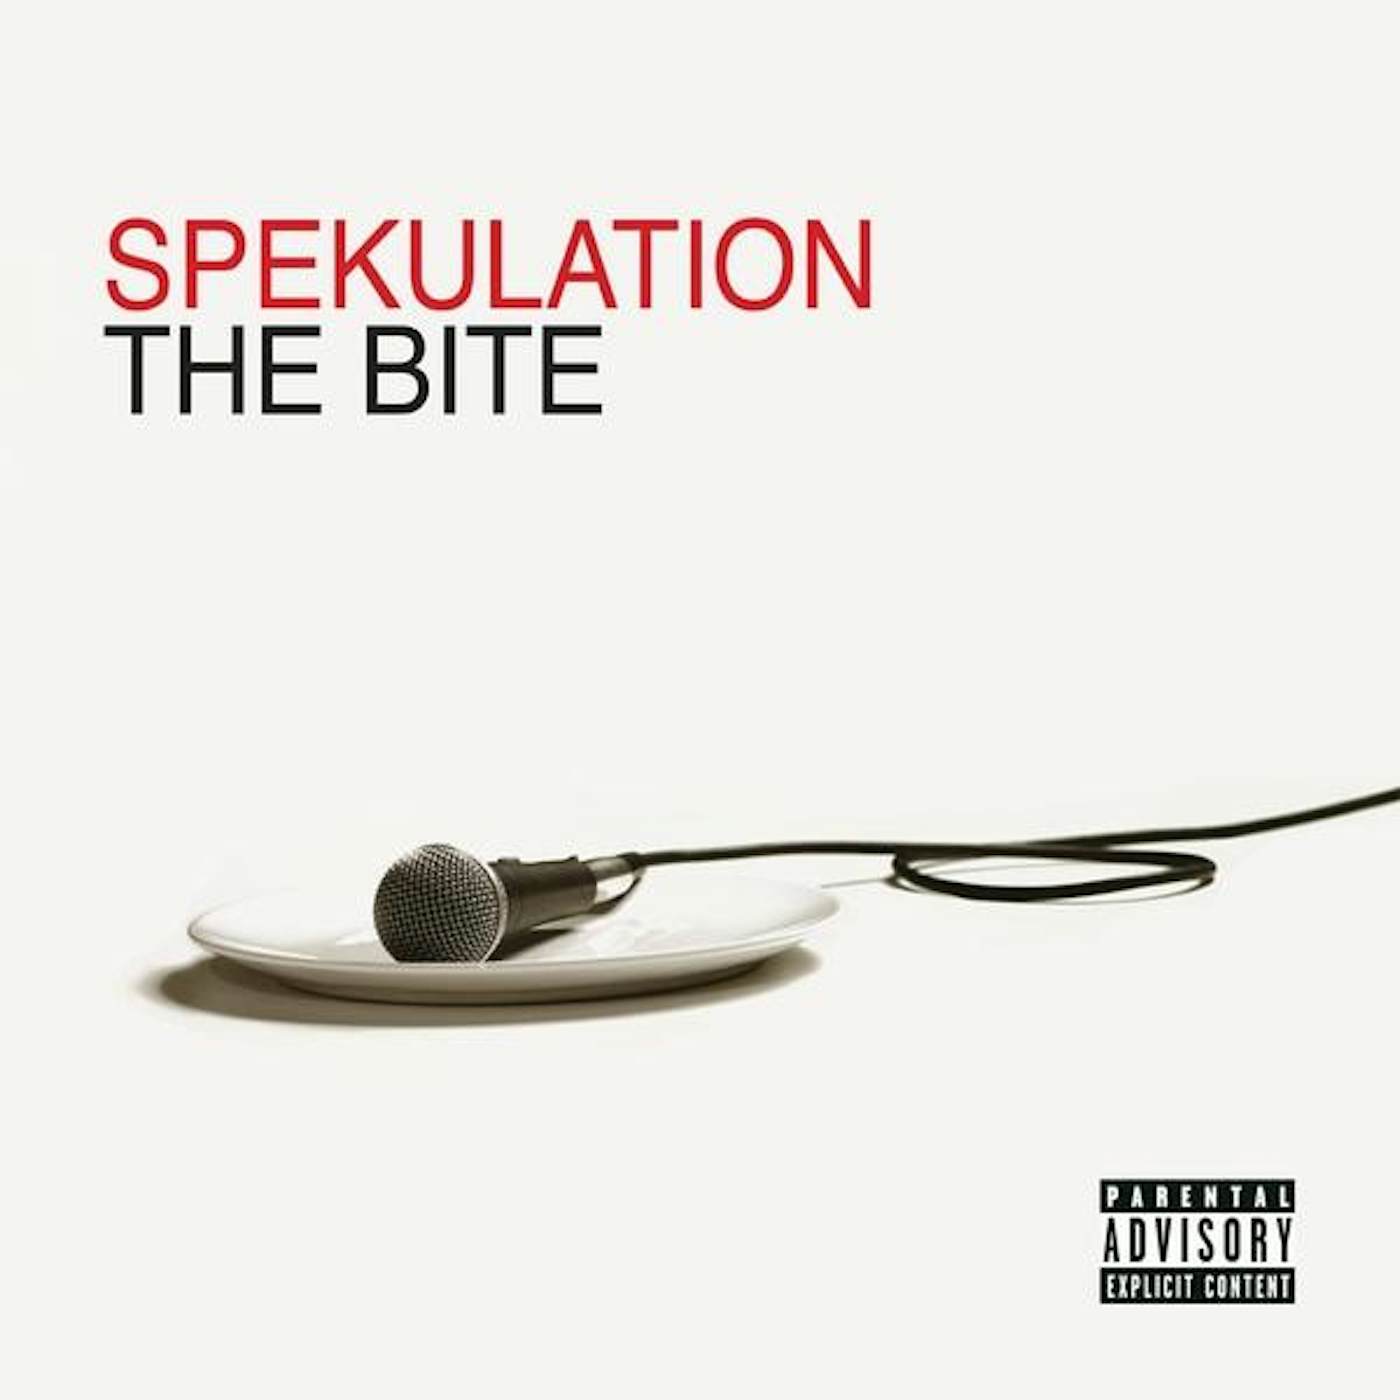 Spekulation BITE CD